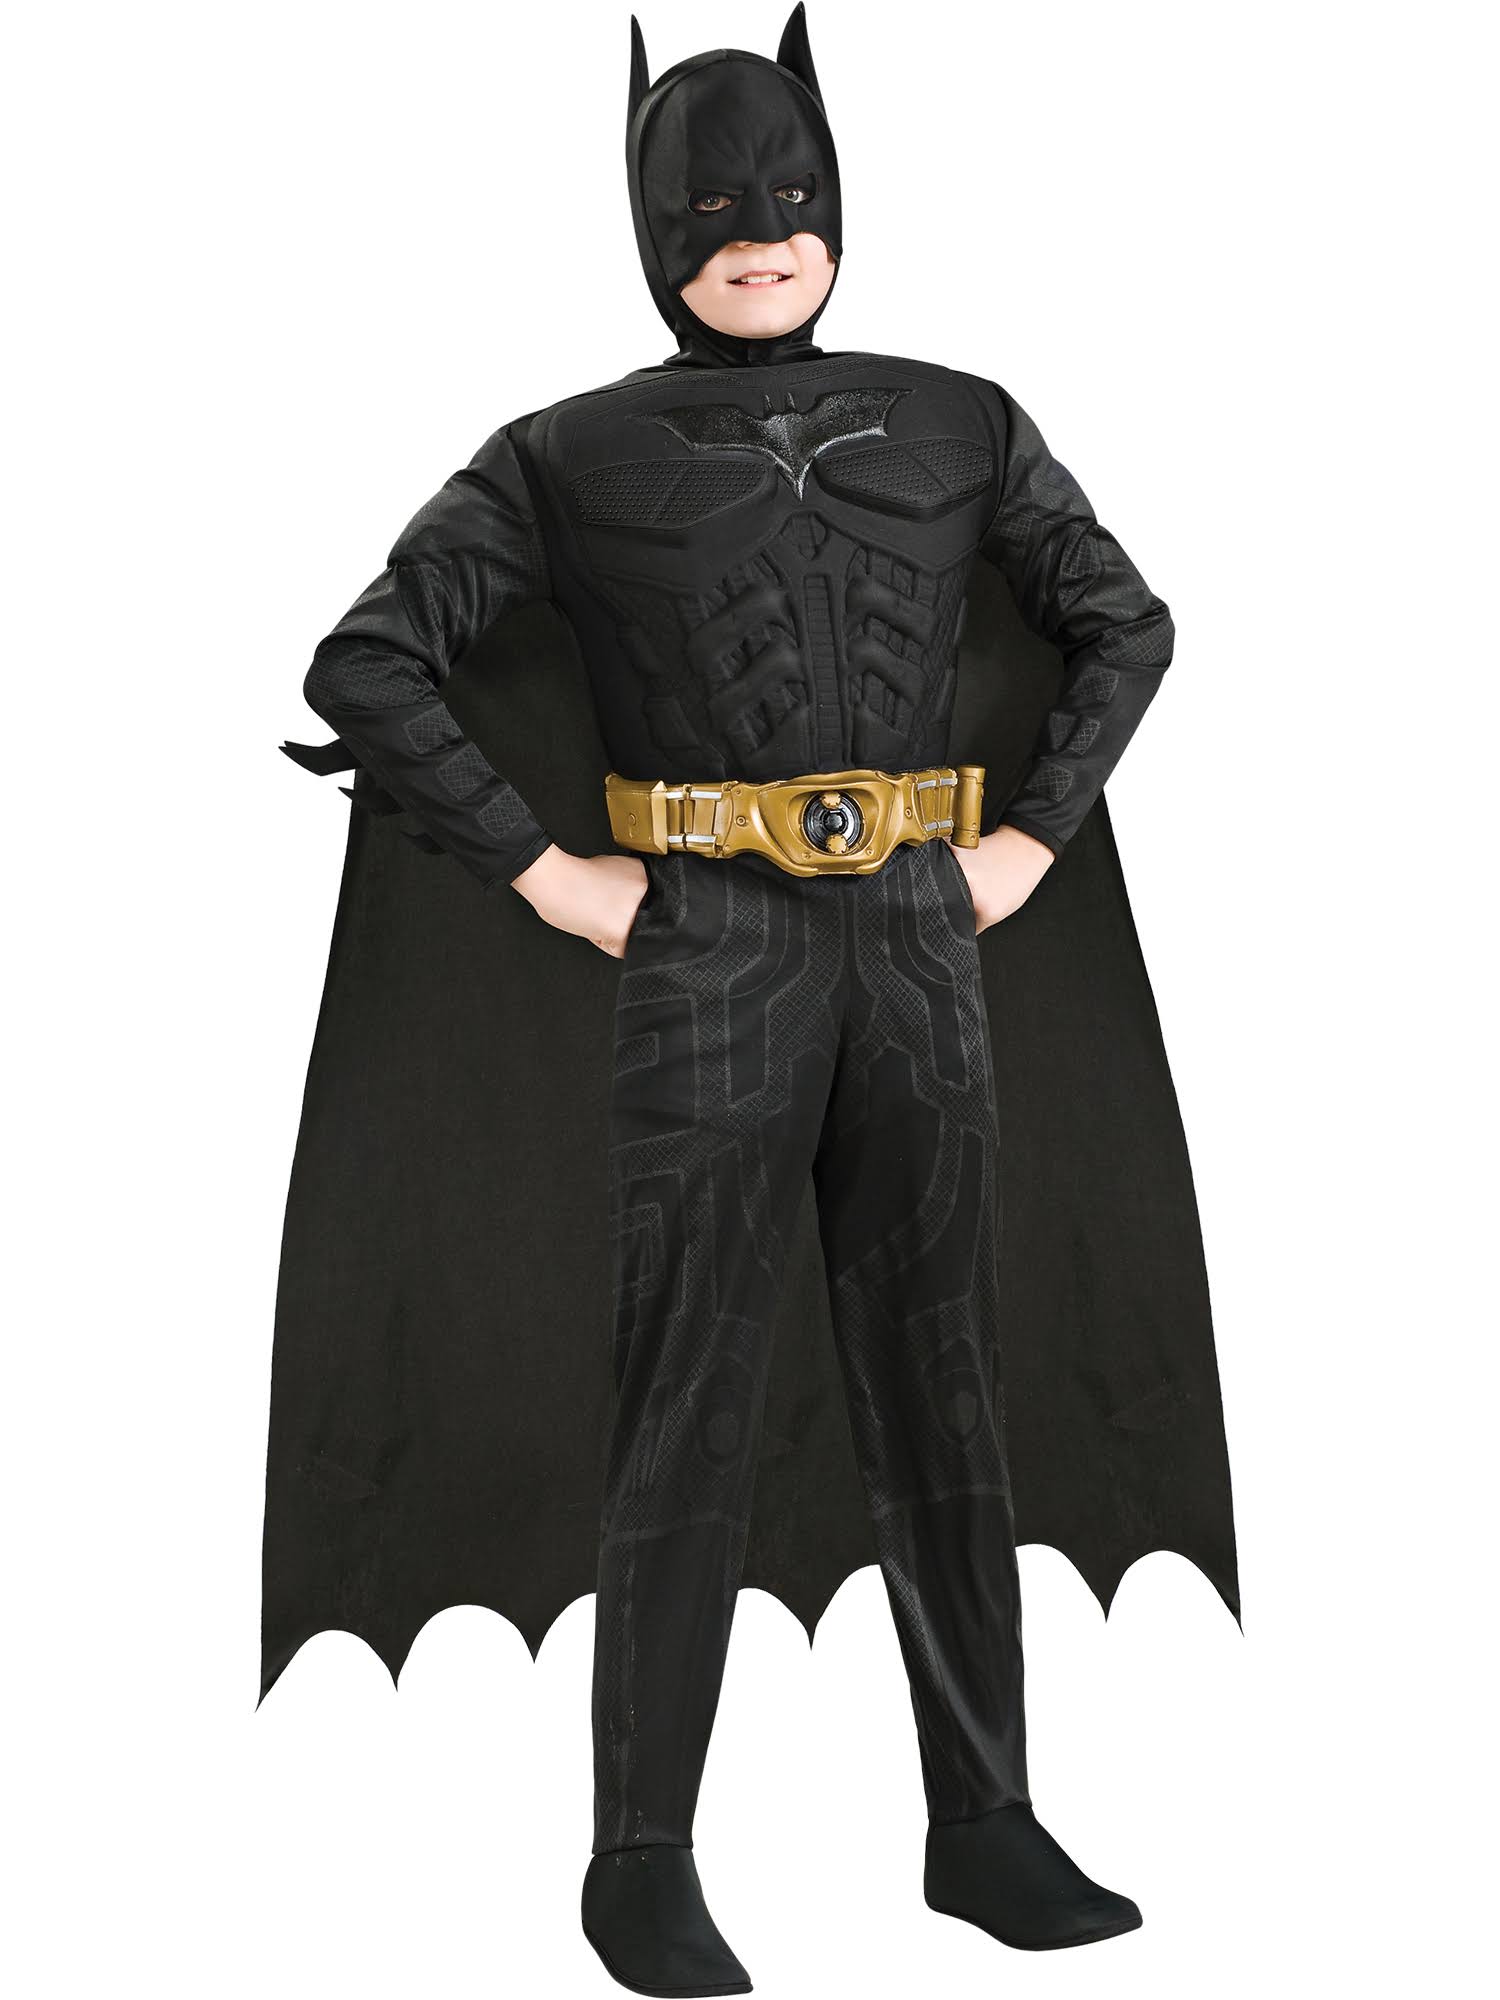 Batman Dark Knight Muscle Chest Costume